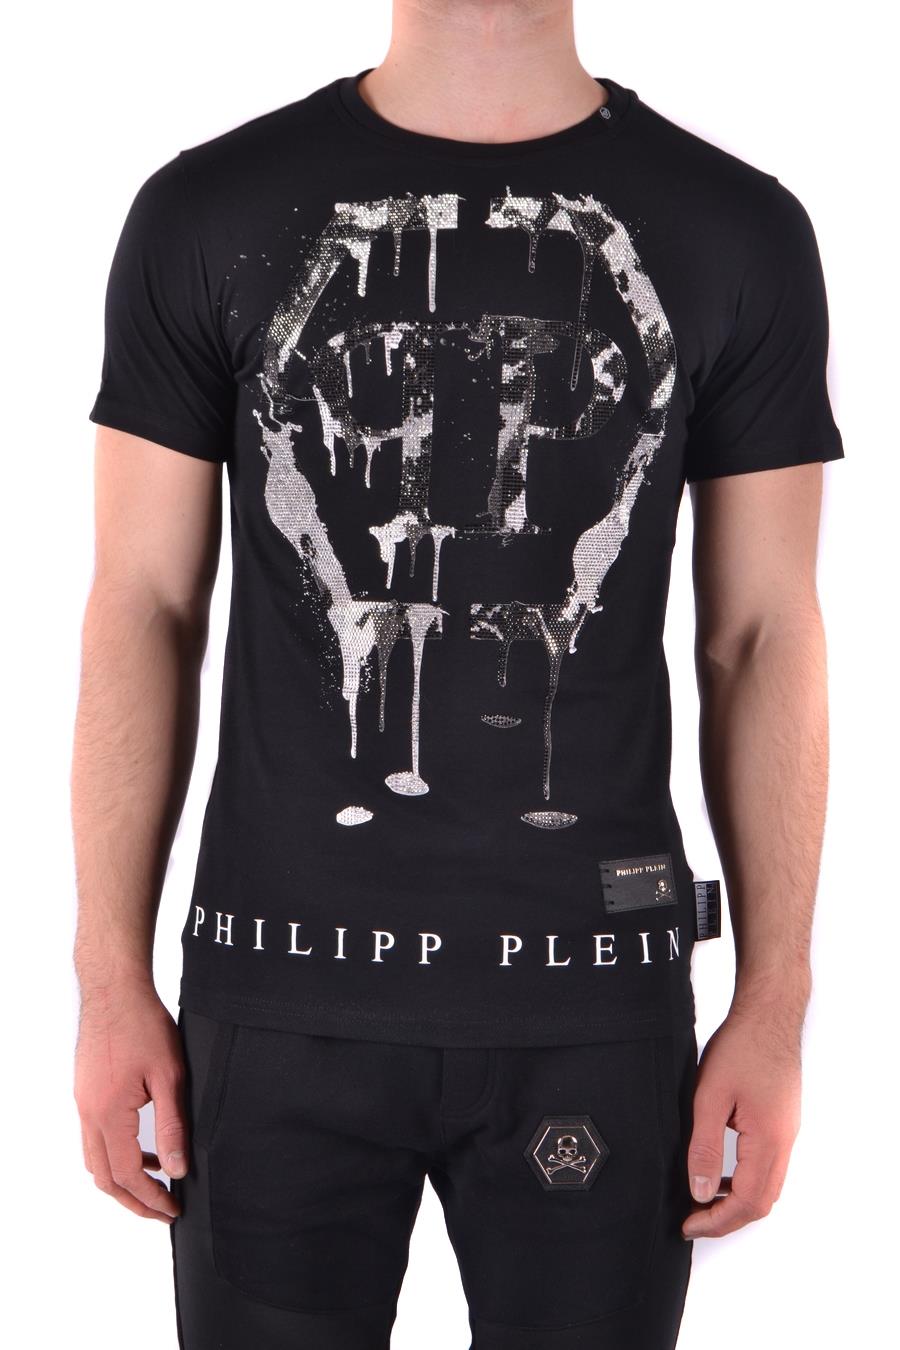 philips plein t shirt